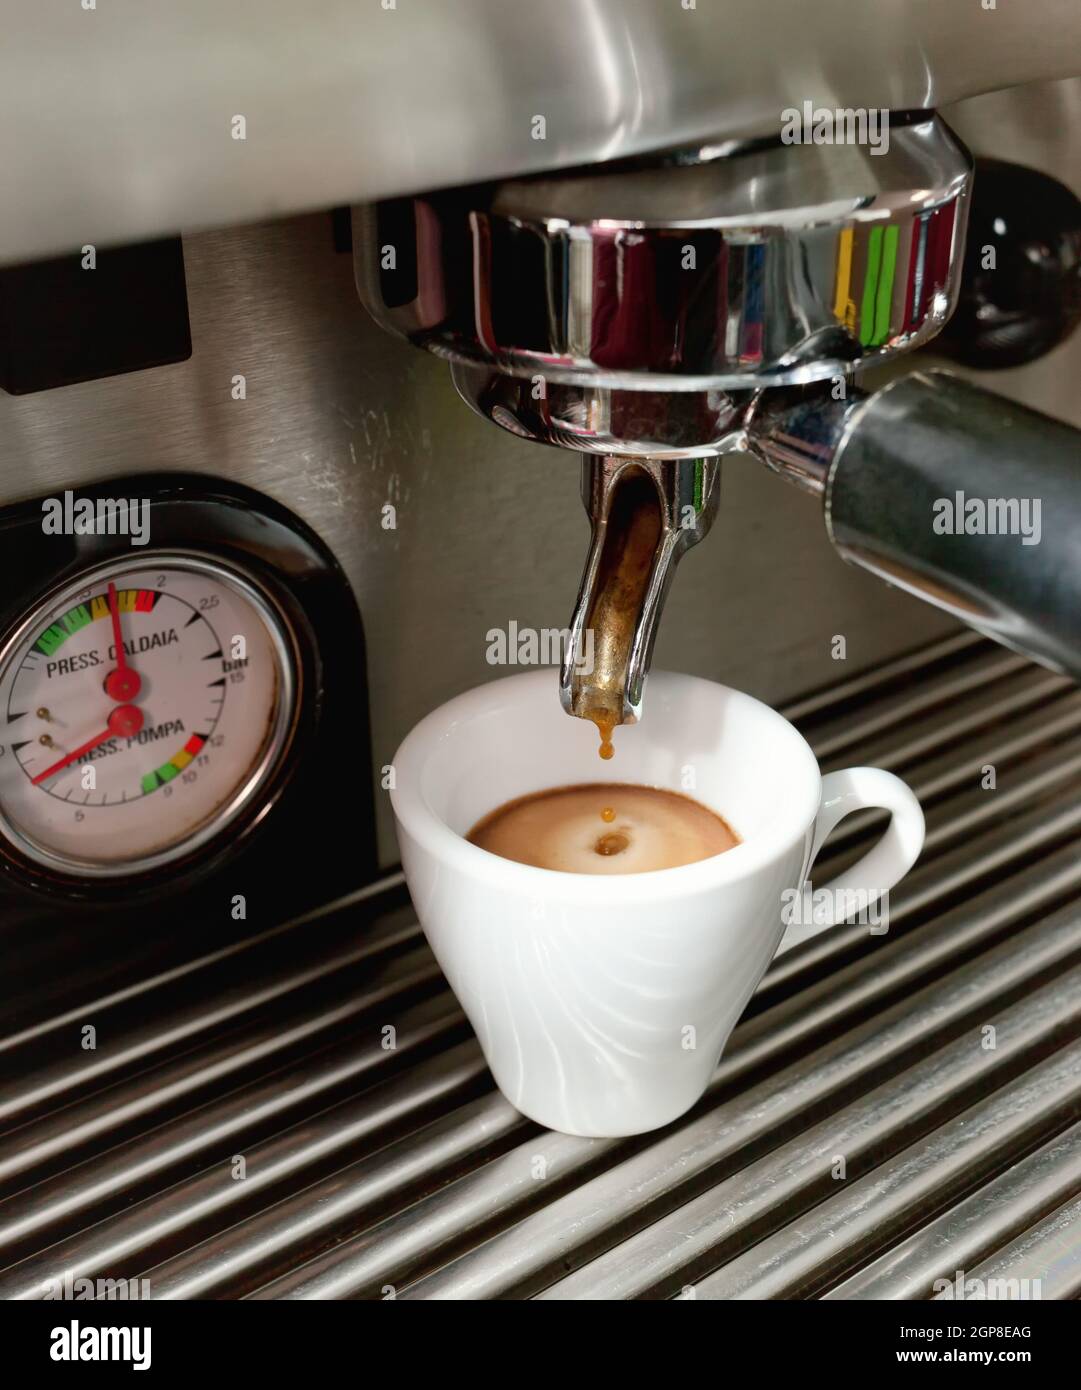 https://c8.alamy.com/compes/2gp8eag/cerca-de-una-maquina-de-espresso-preparar-una-taza-de-cafe-2gp8eag.jpg